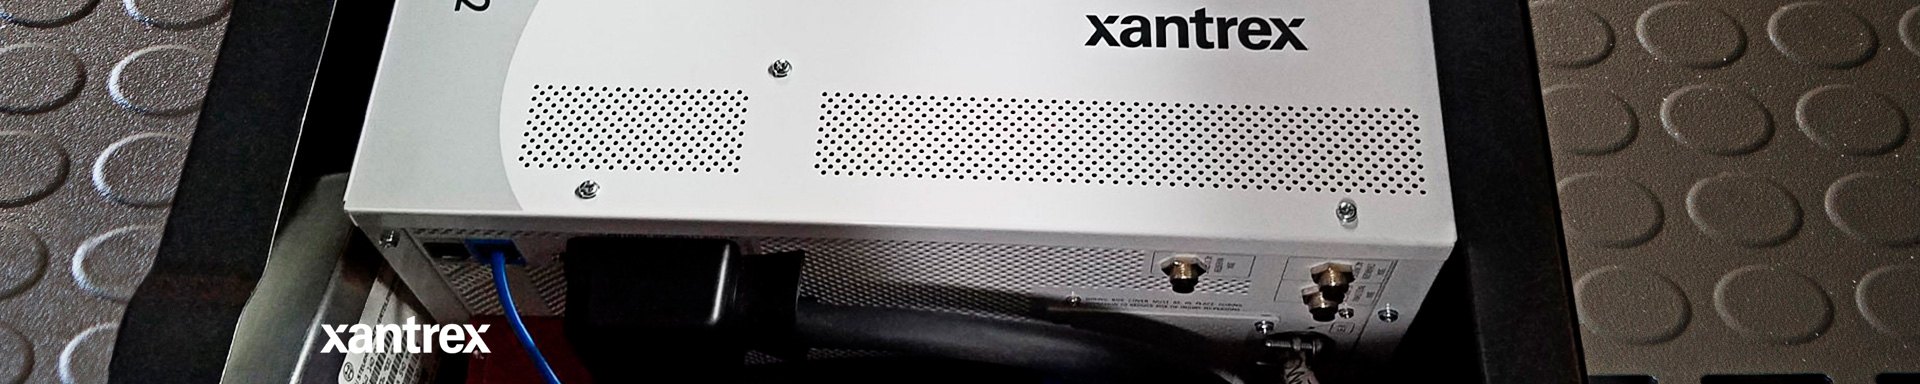 Xantrex Renewable Energy